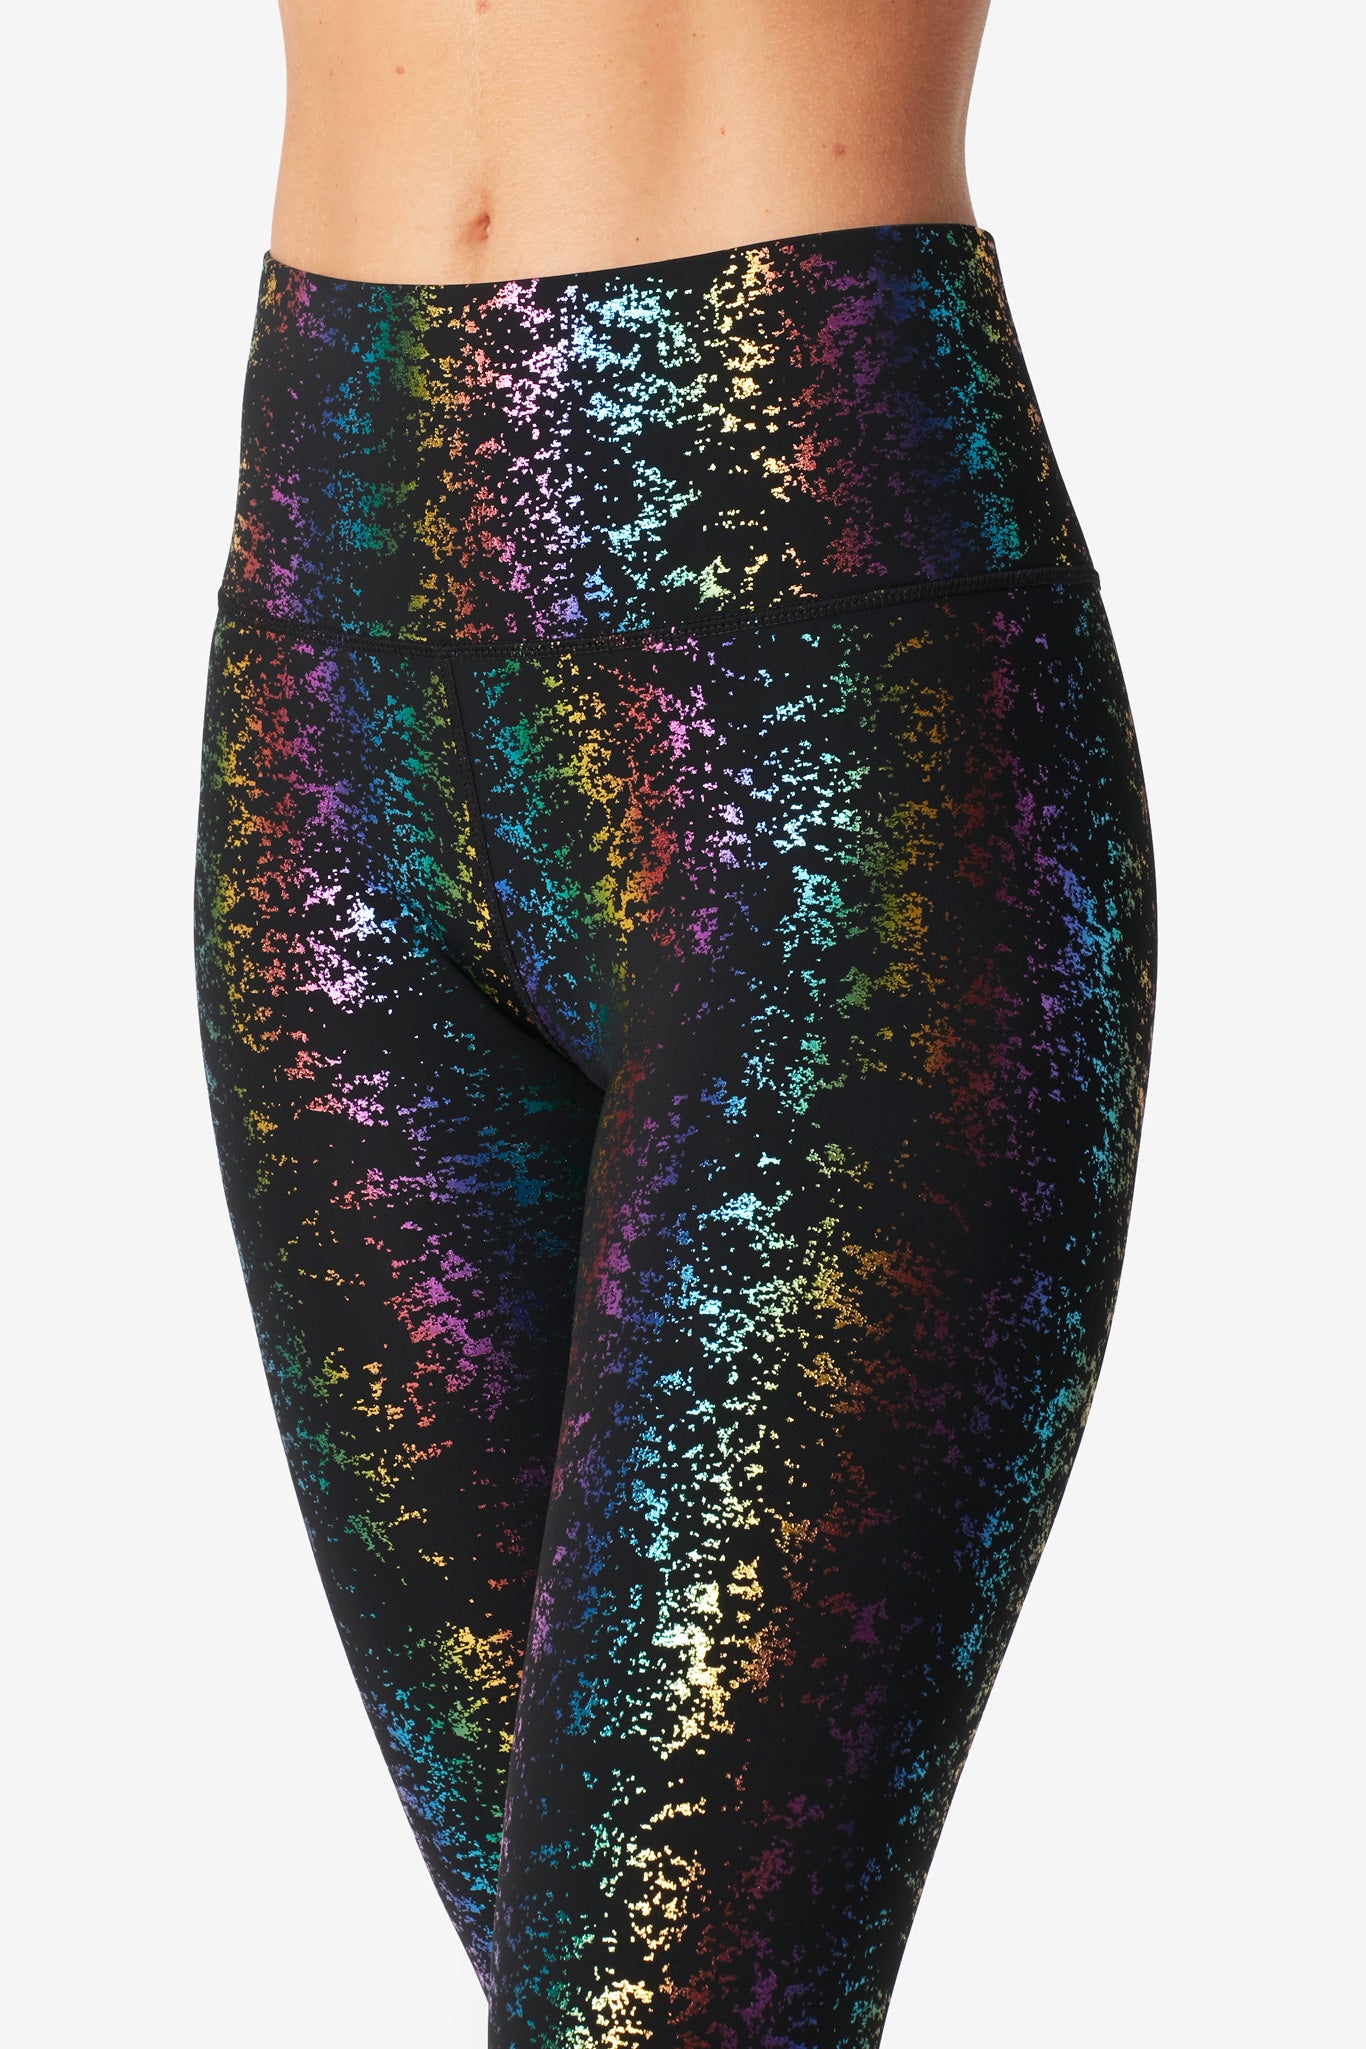 Iridescent Rainbow Glitter Gradient Stock Printed Yoga Leggings